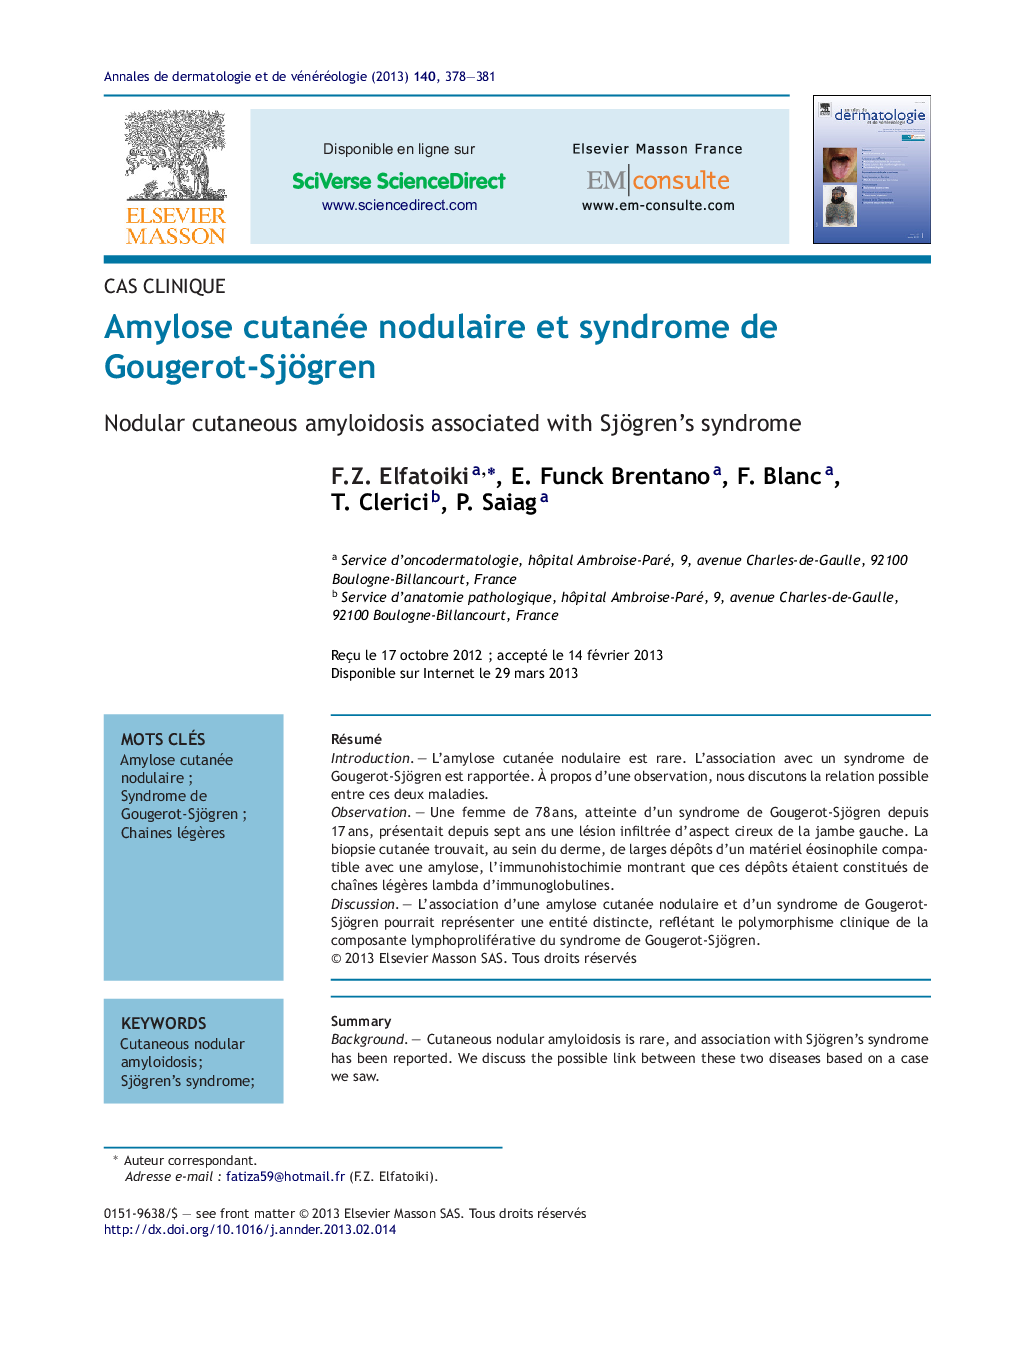 Amylose cutanée nodulaire et syndrome de Gougerot-Sjögren